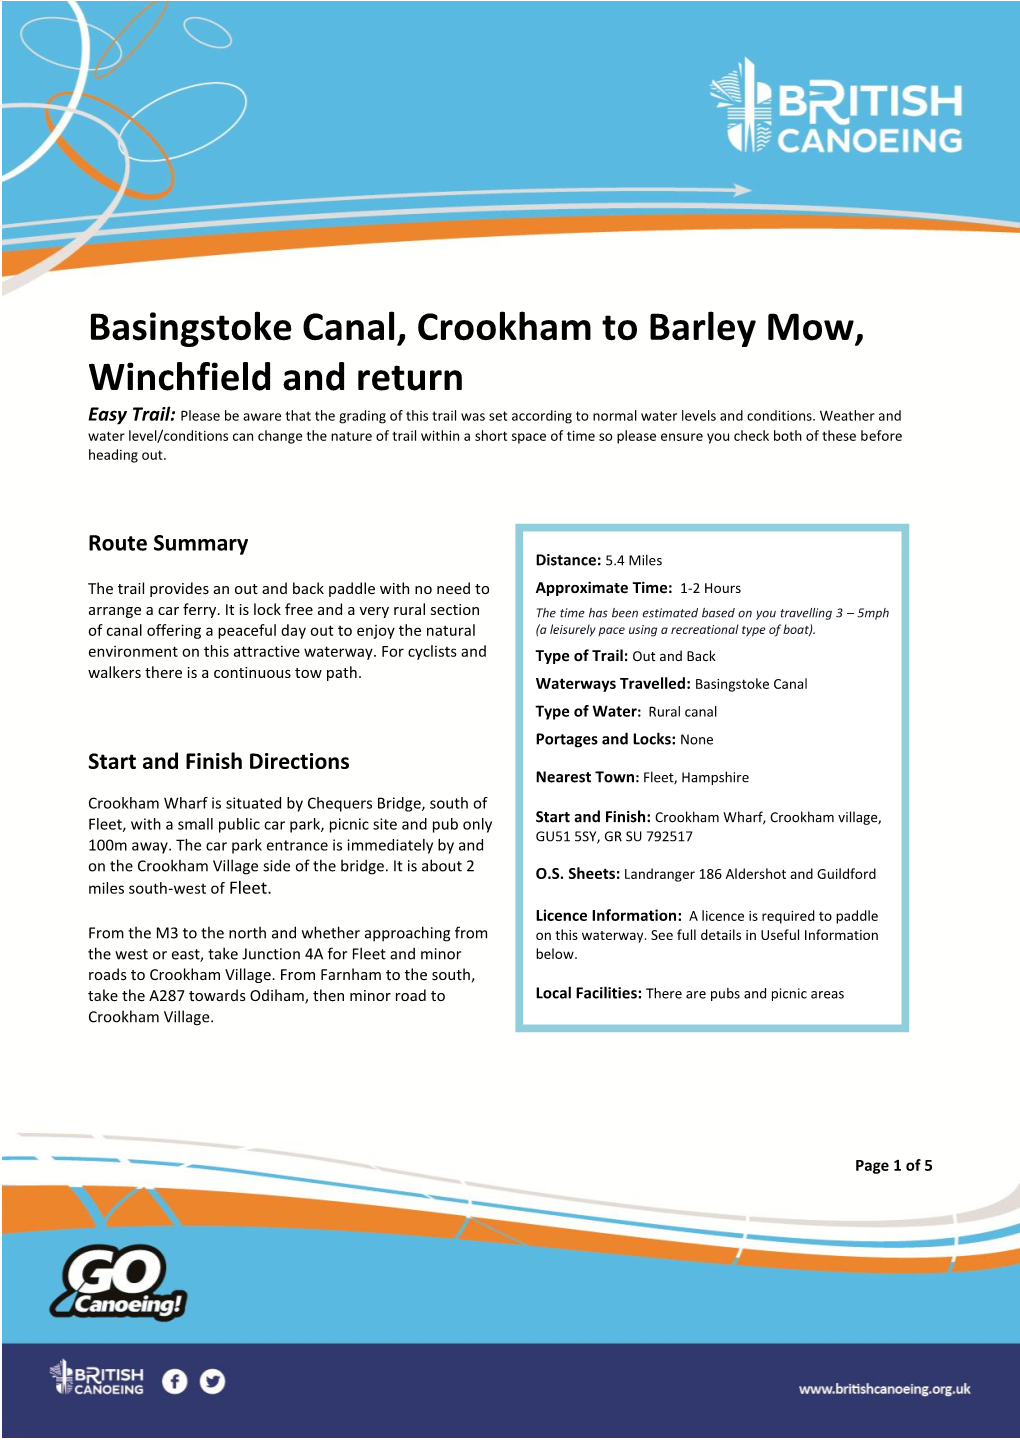 Basingstoke Canal, Crookham to Barley Mow, Winchfield and Return